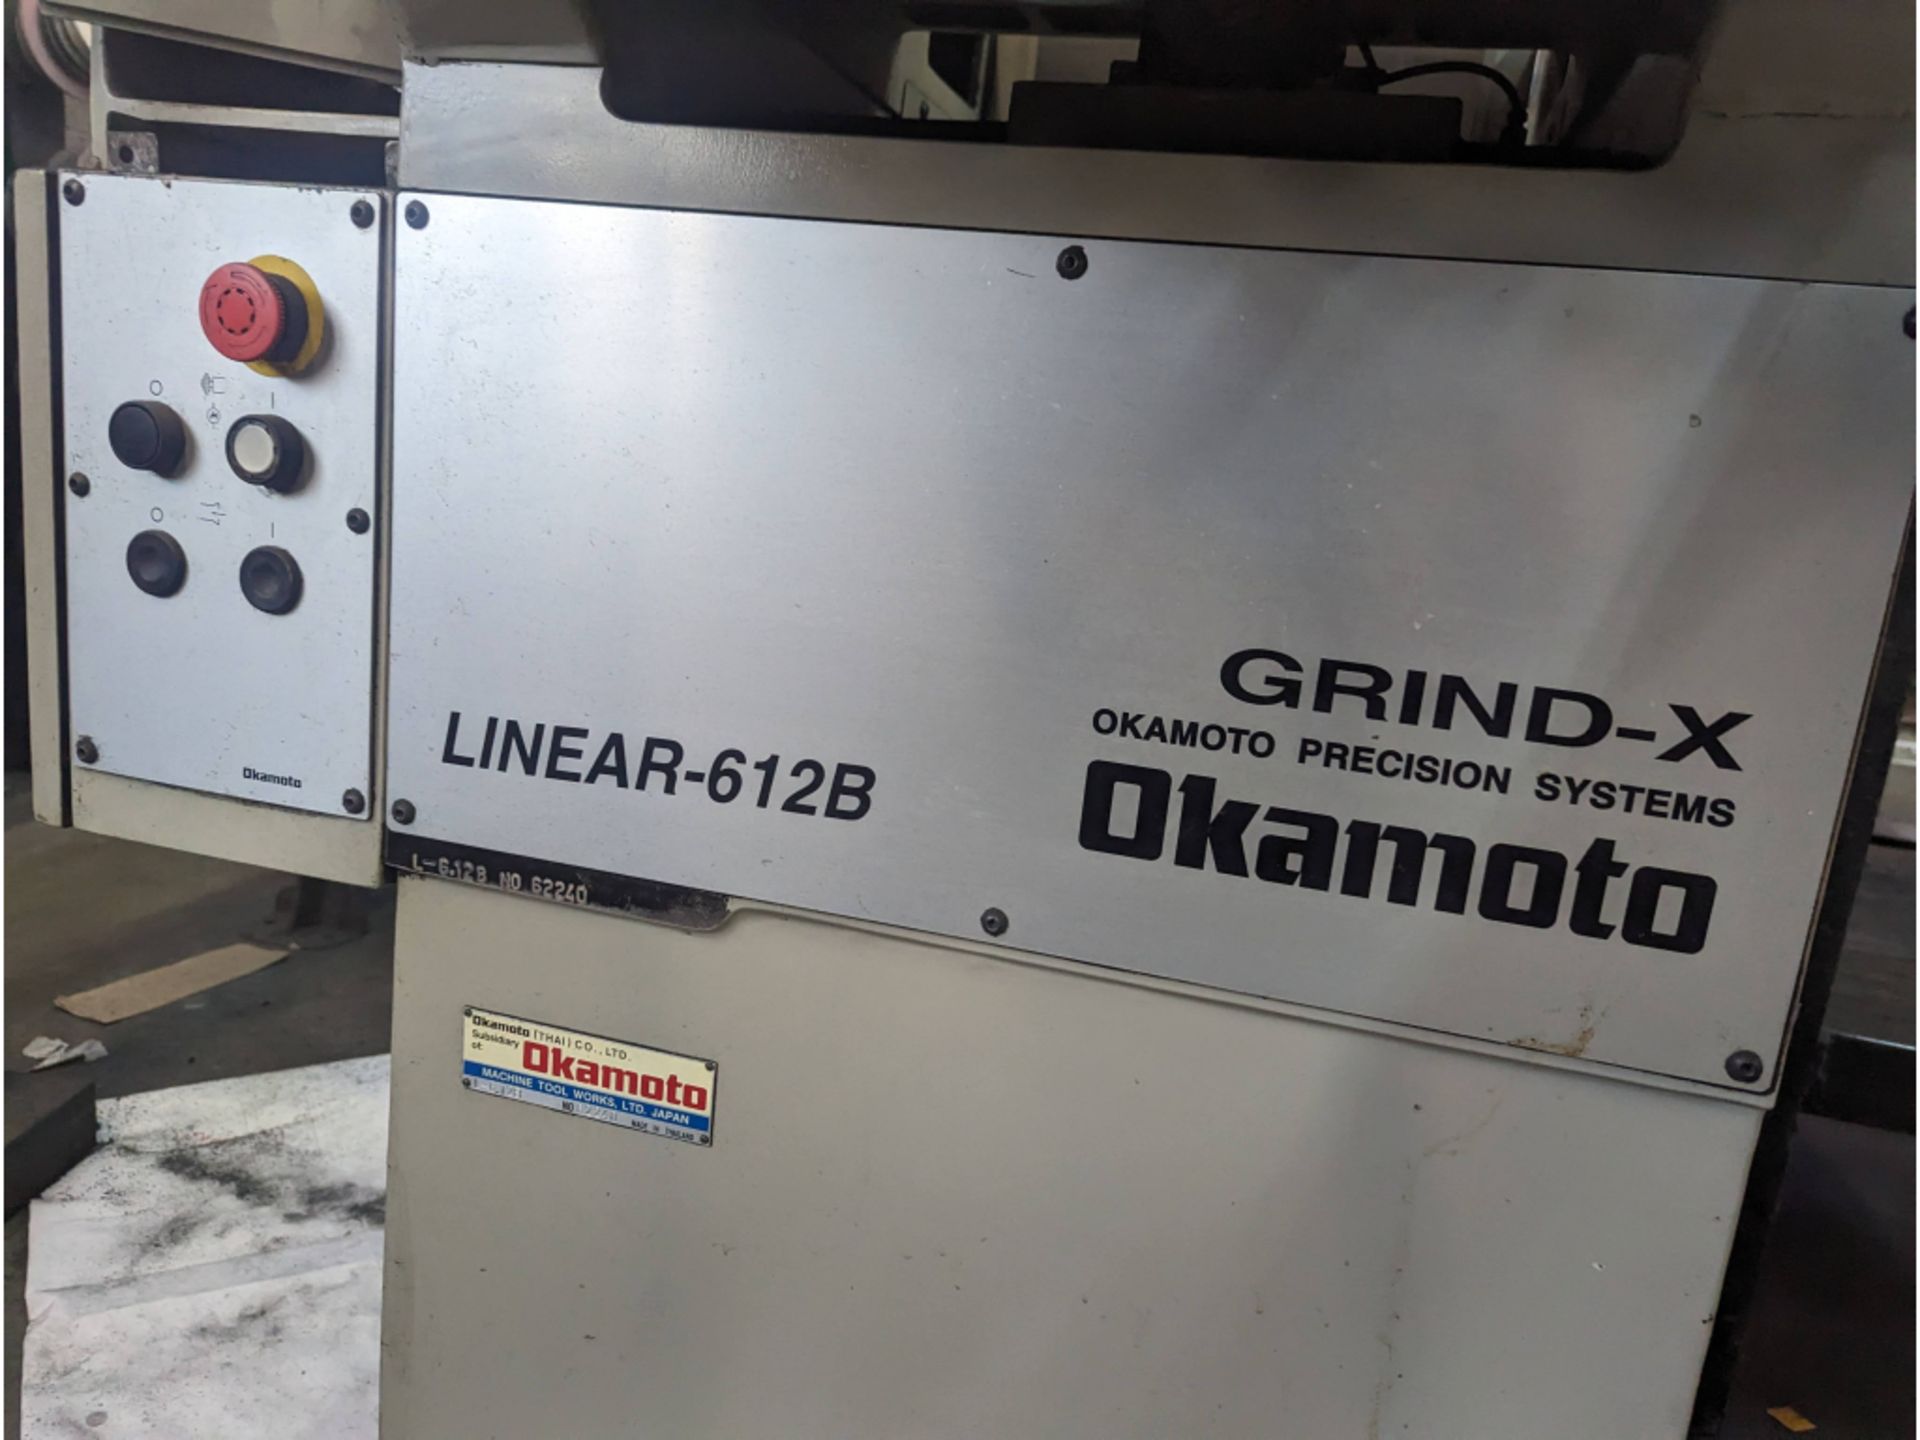 Okamotor Linear 612-B Surface Grinder - Image 6 of 7